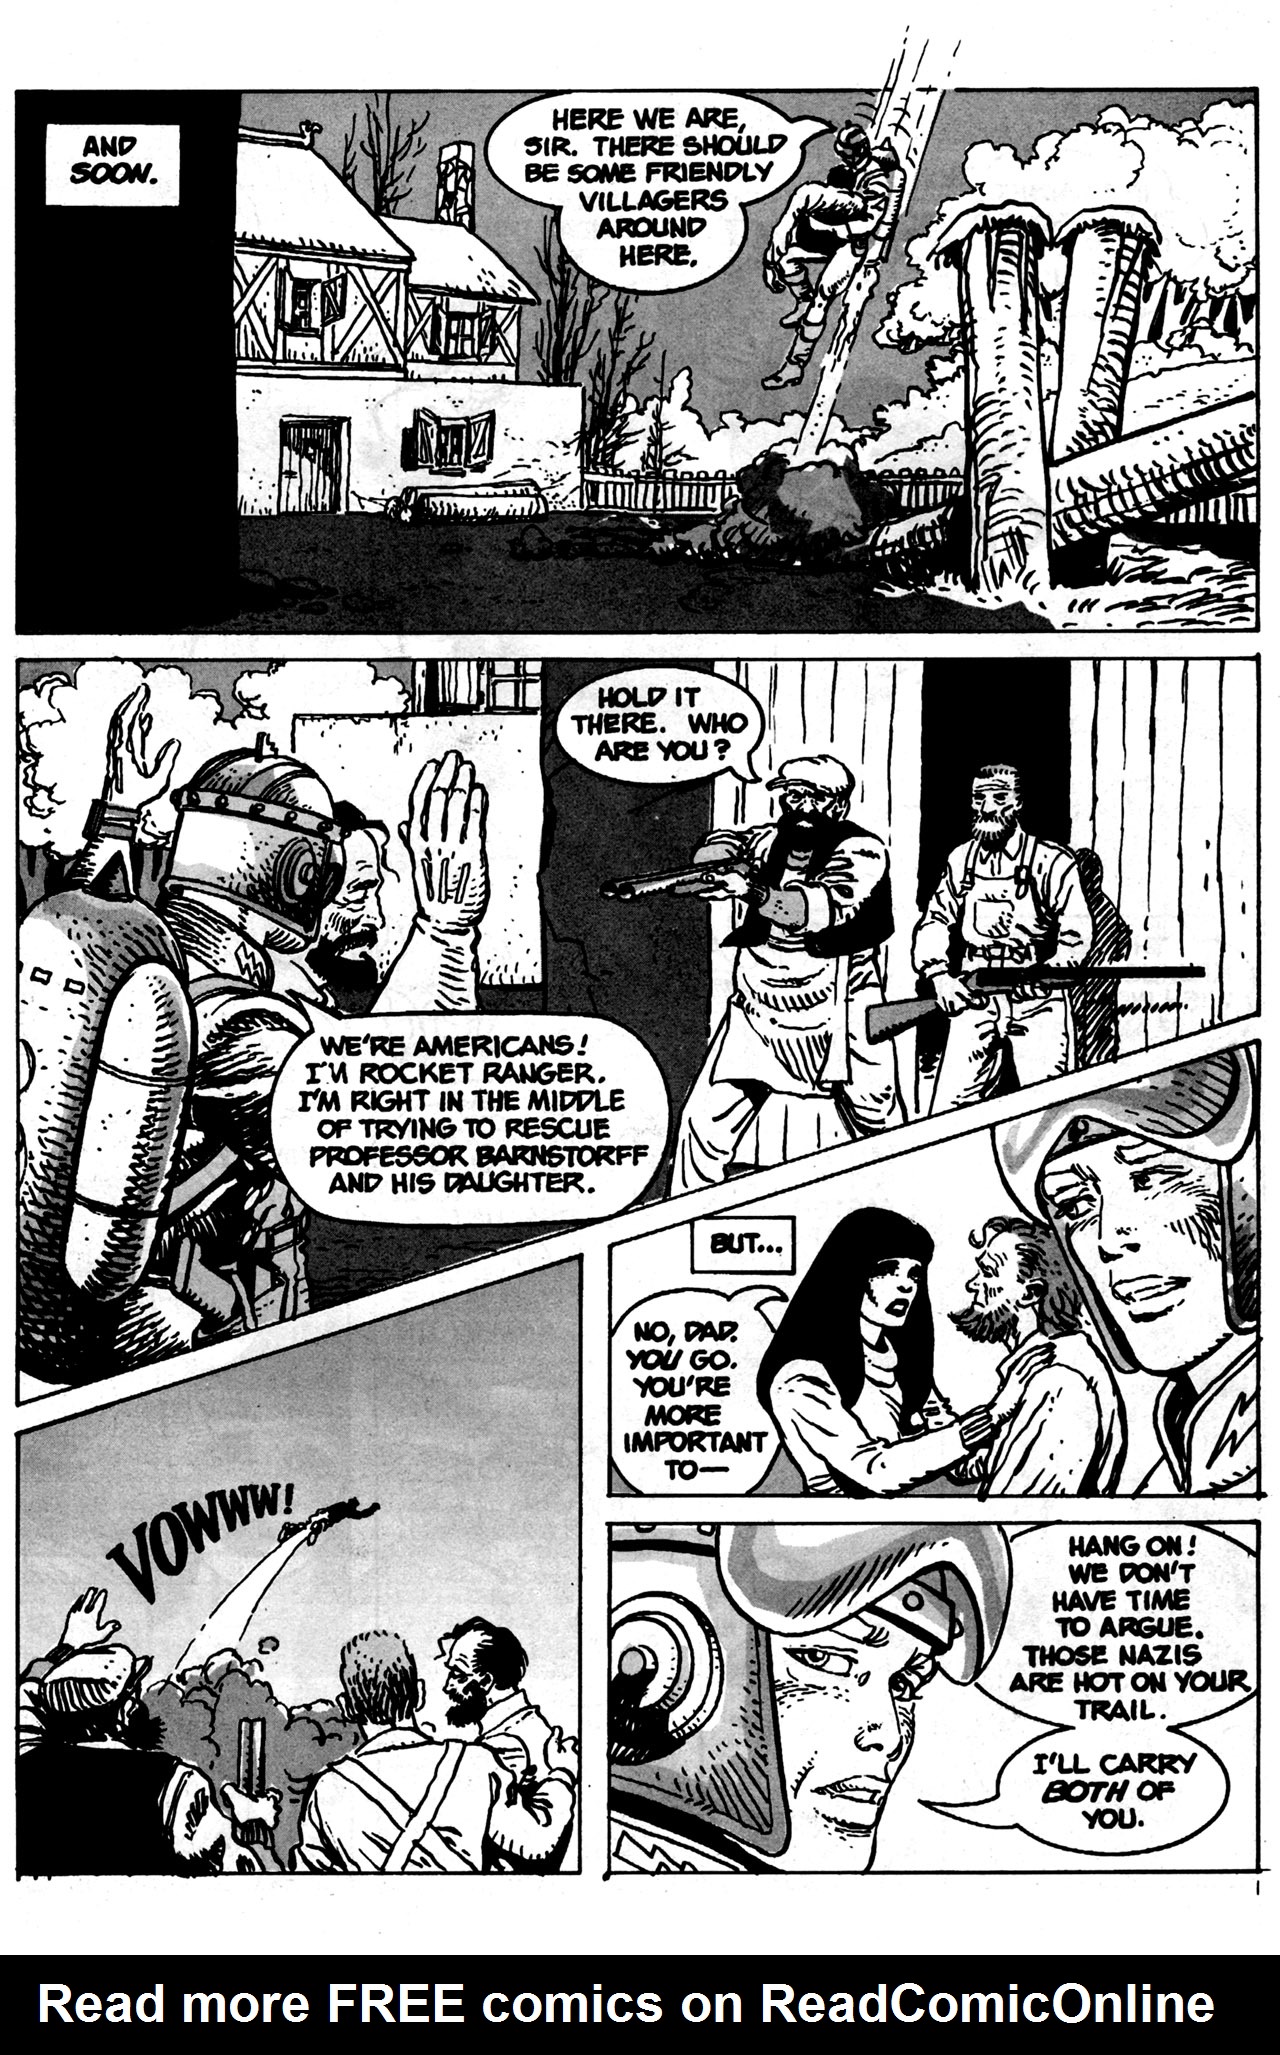 Read online Rocket Ranger comic -  Issue #3 - 23